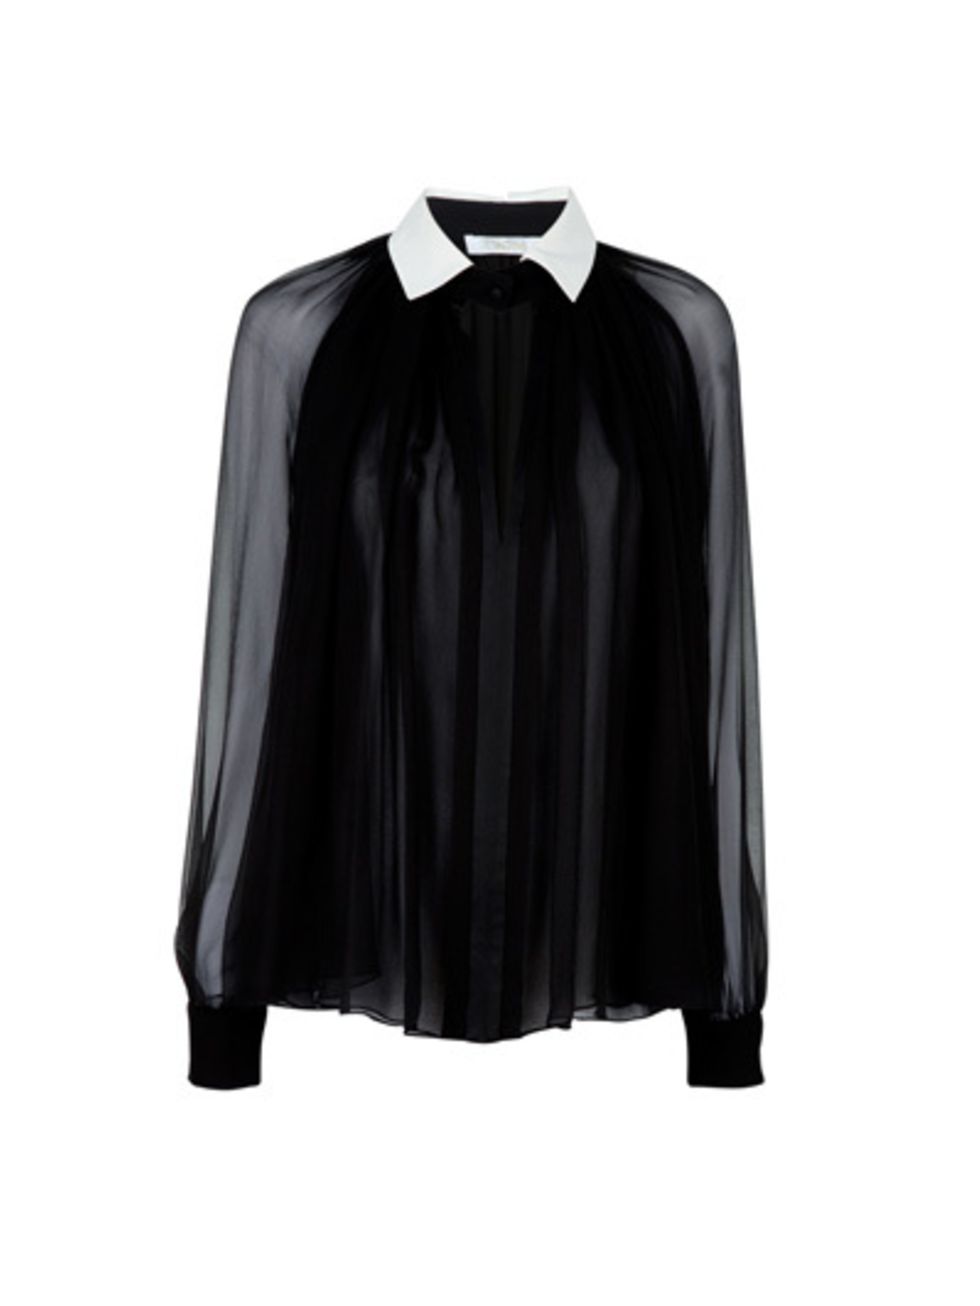 Collar, Sleeve, Clothes hanger, Black, Fashion design, Active shirt, Home accessories, 